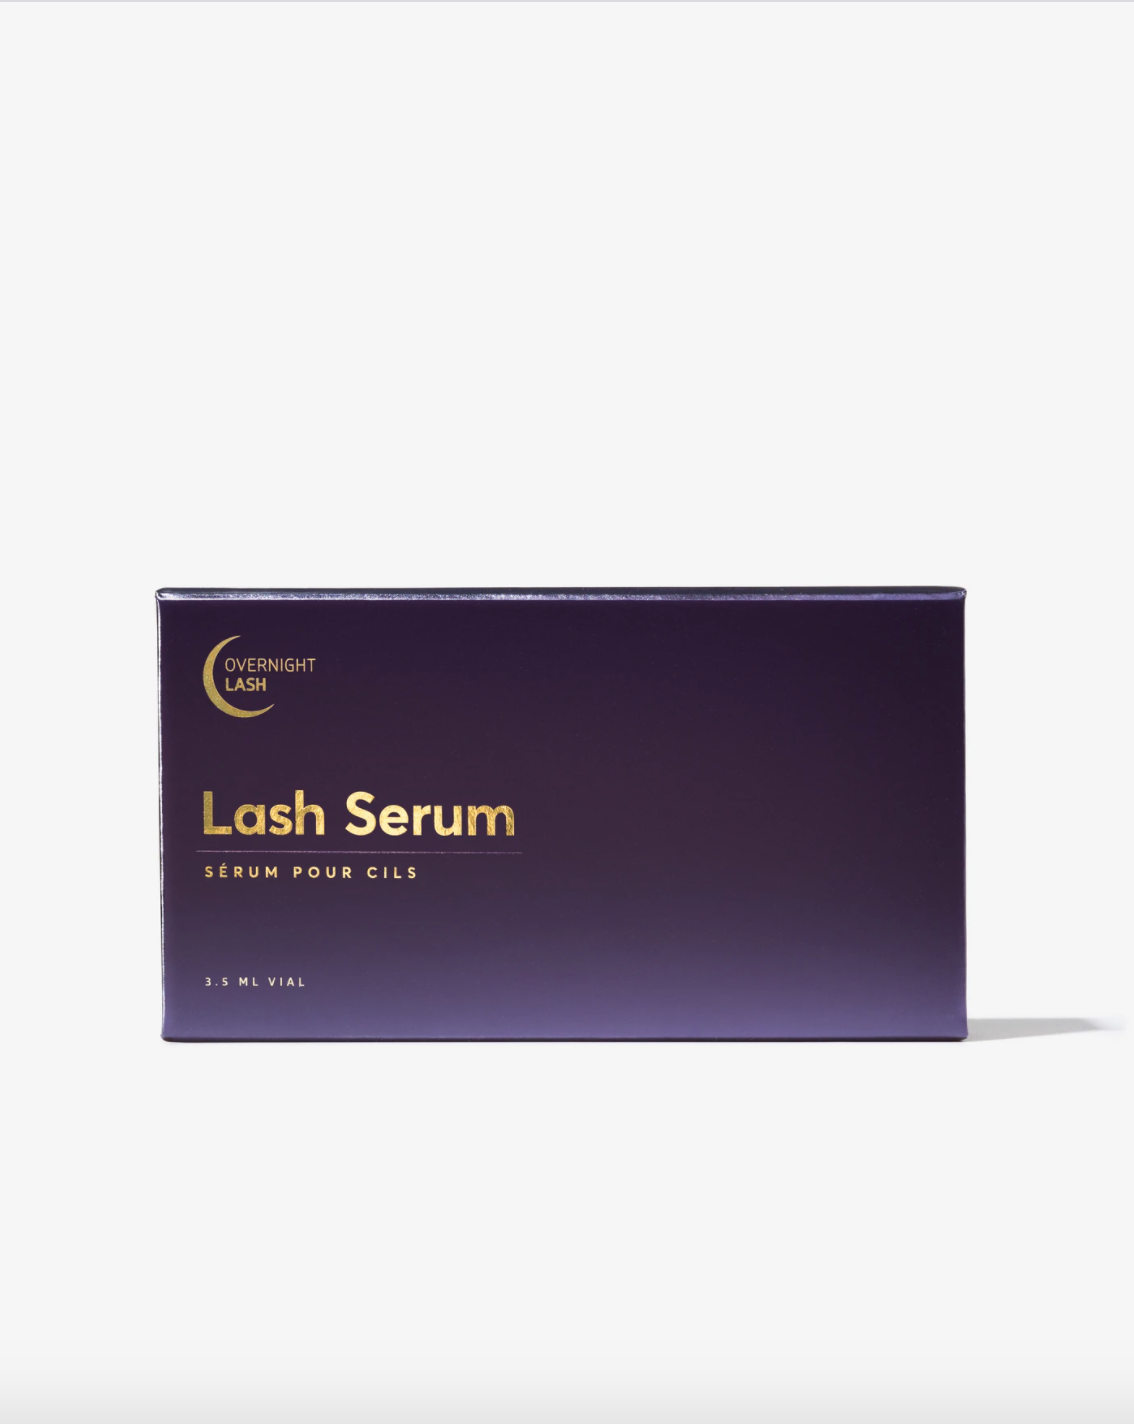 AnteAGE® Overnight Lash Growth Serum - Click to Buy!